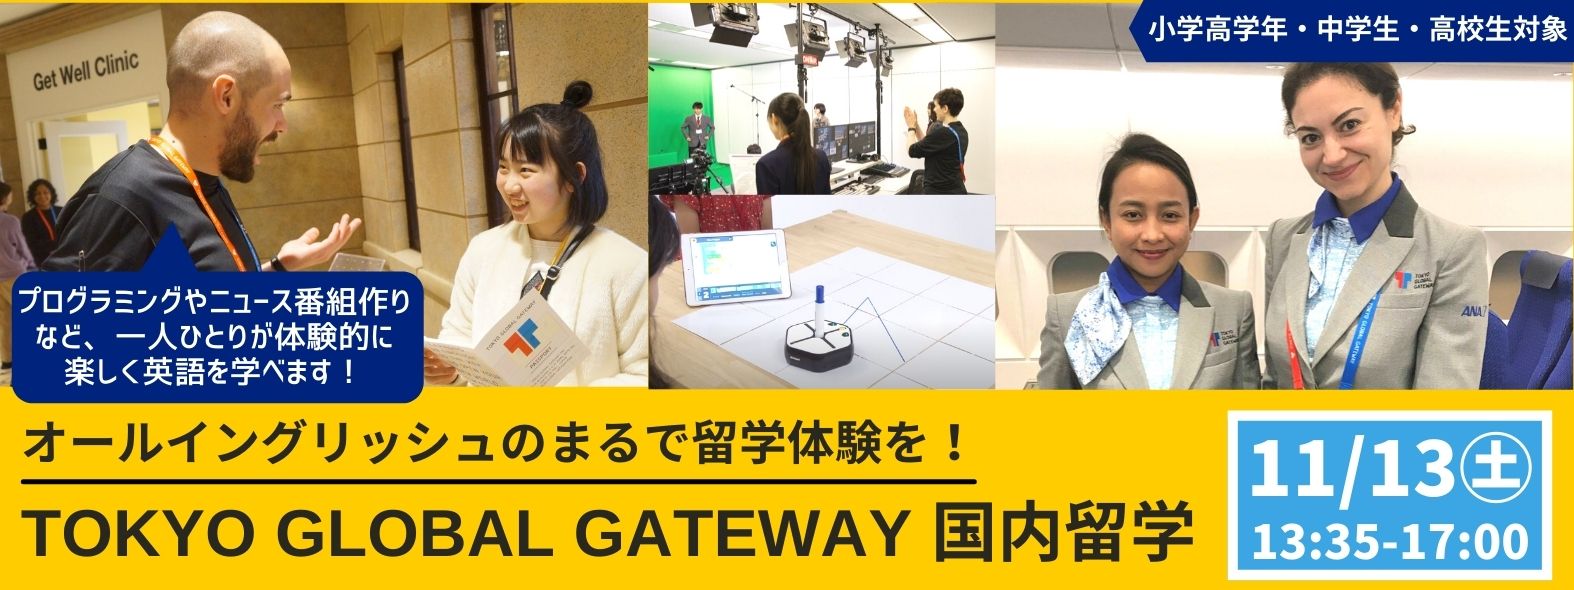 国内留学 in TOKYO GLOBAL GATEWAY(TGG)